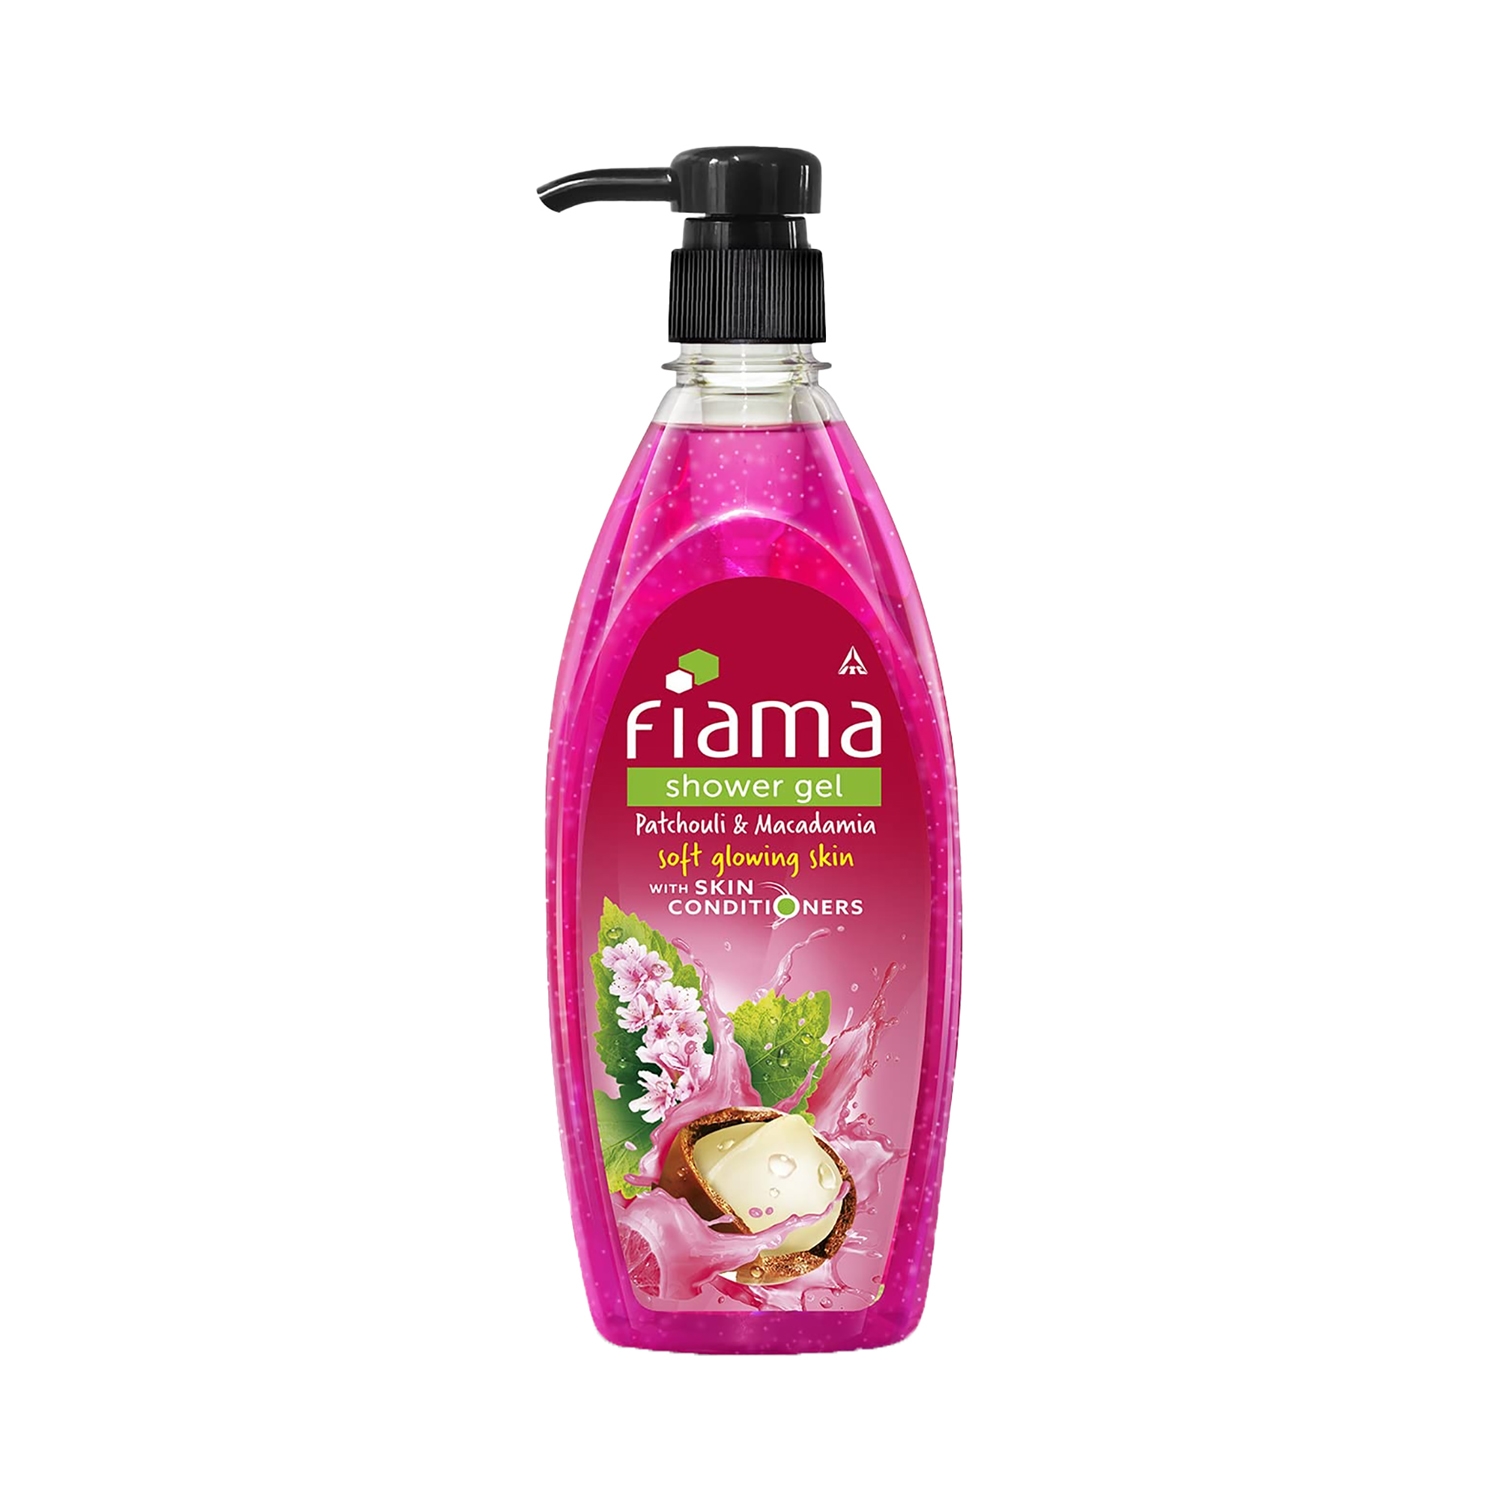 Fiama Patchouli & Macadamia Shower Gel With Skin Conditioners (500ml)